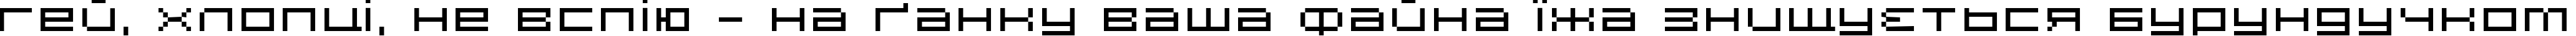 Пример написания шрифтом DS Hiline текста на украинском